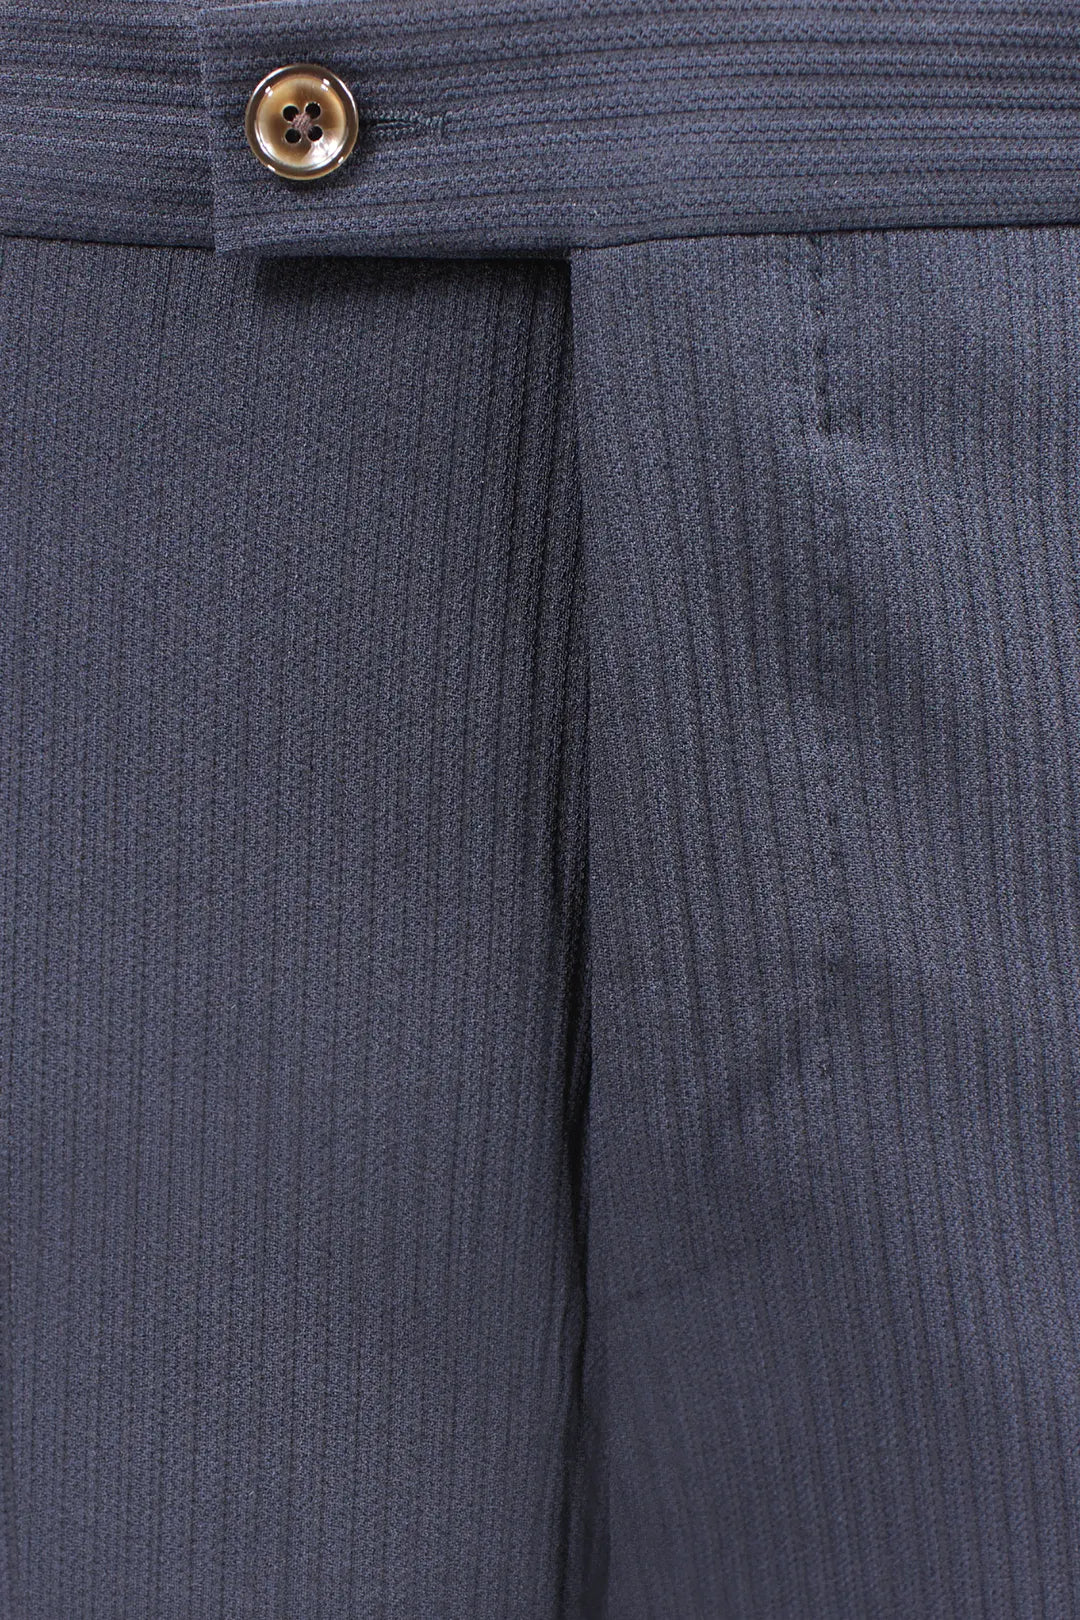 Pantalone lana stretch coste blu bottone